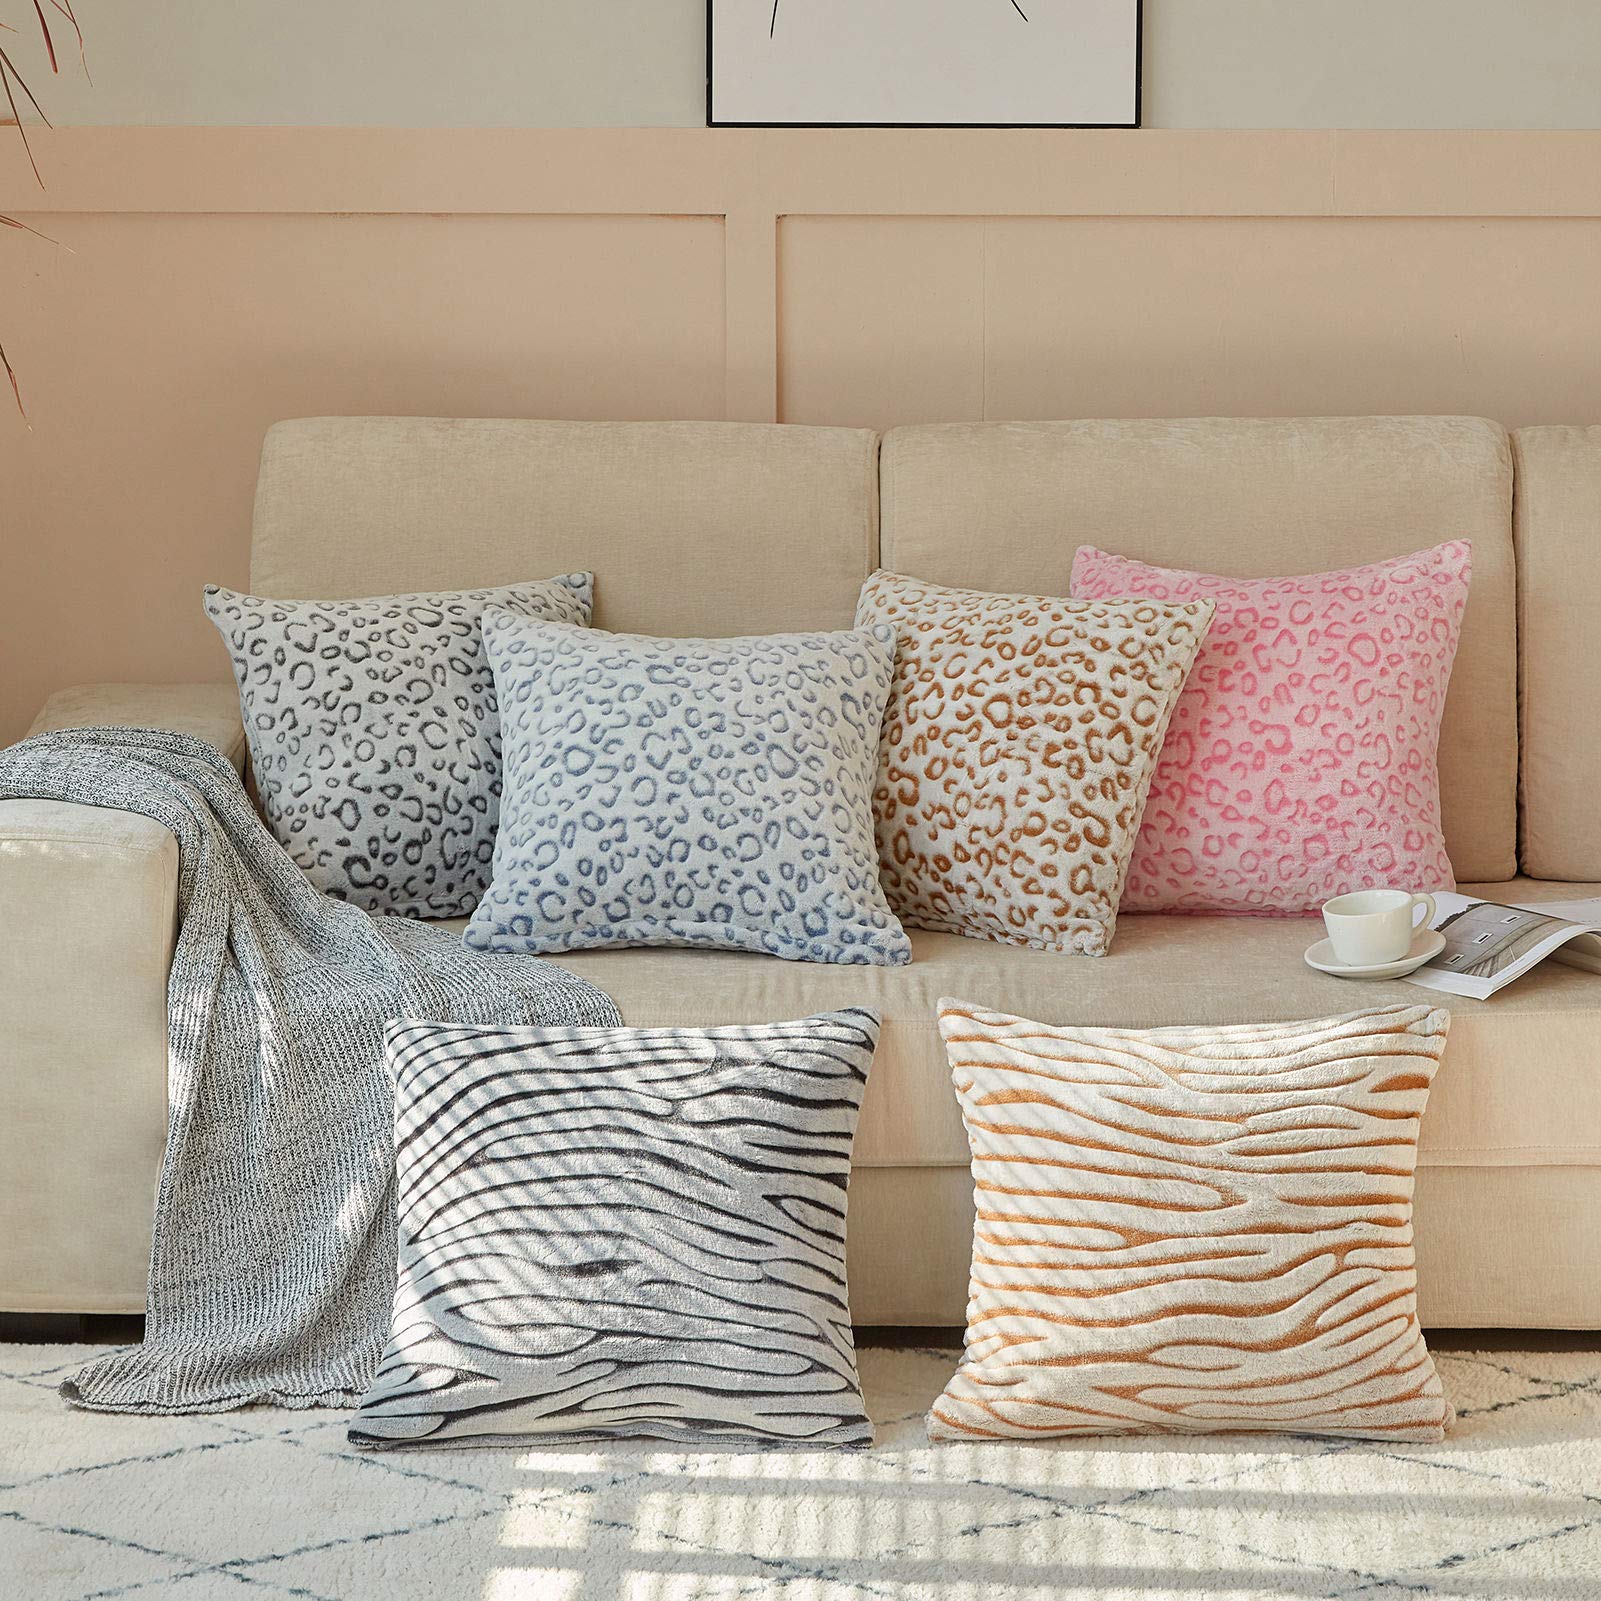 Flannel Fleece Pillow Cover - Leopard Print